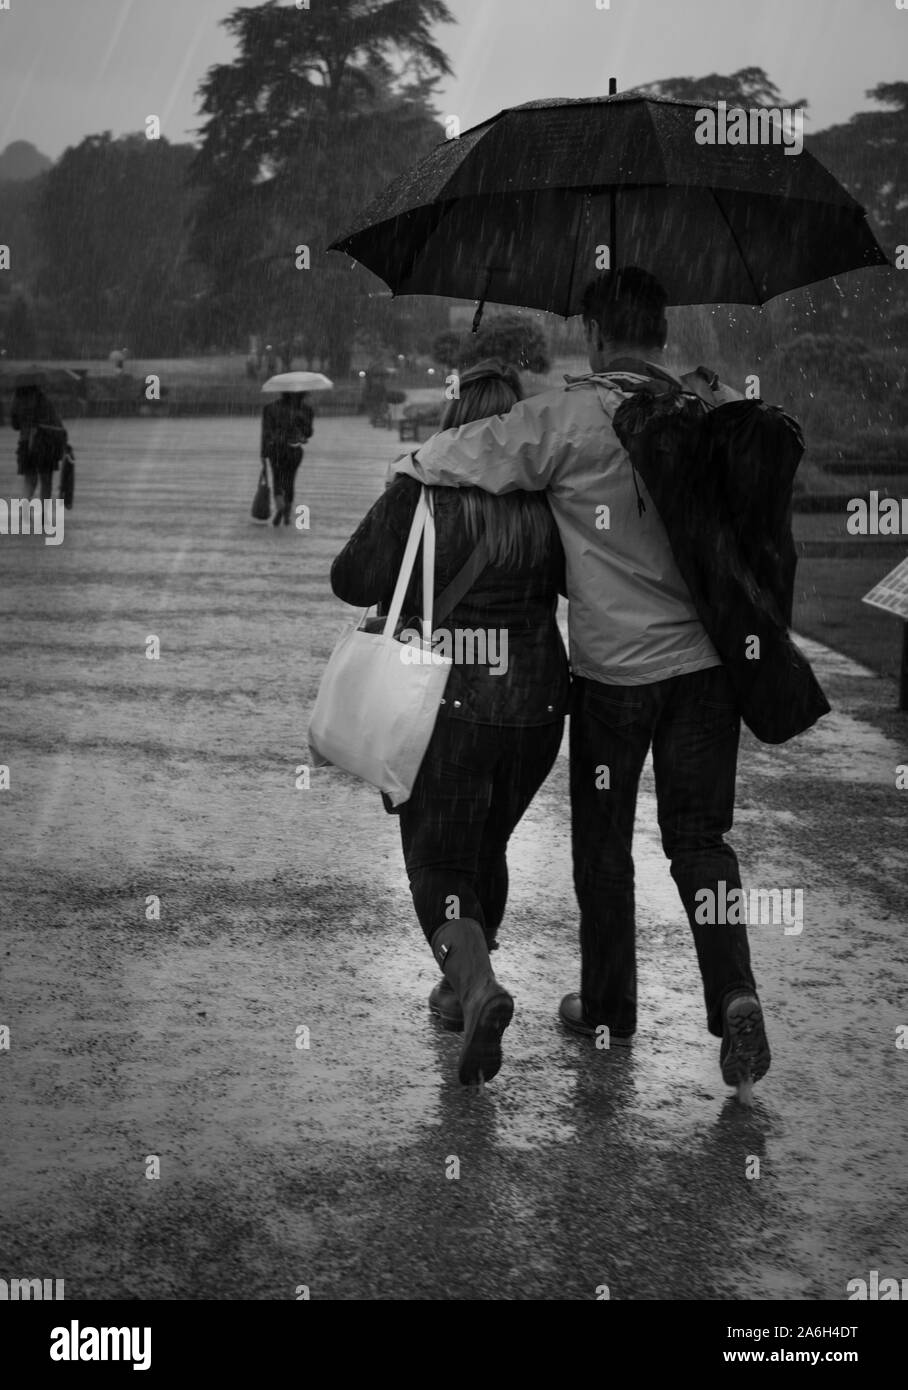 A couple walk in heavy rain under an umbrella Stock Photo